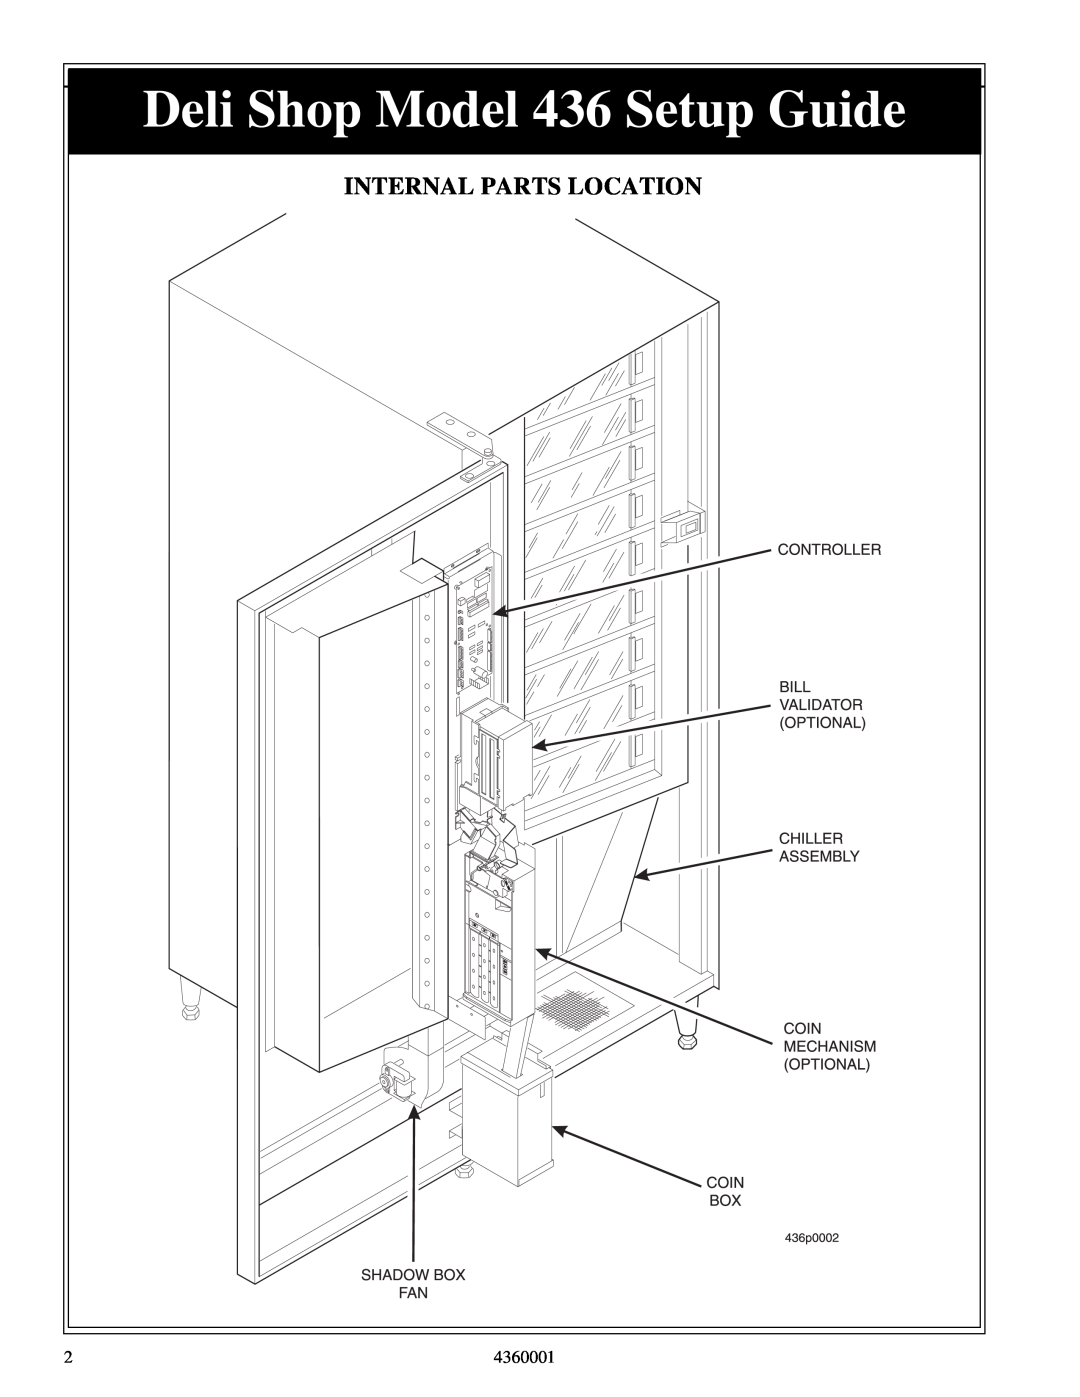 Crane Merchandising Systems manual Internal Parts Location, Deli Shop Model 436 Setup Guide, 4360001 